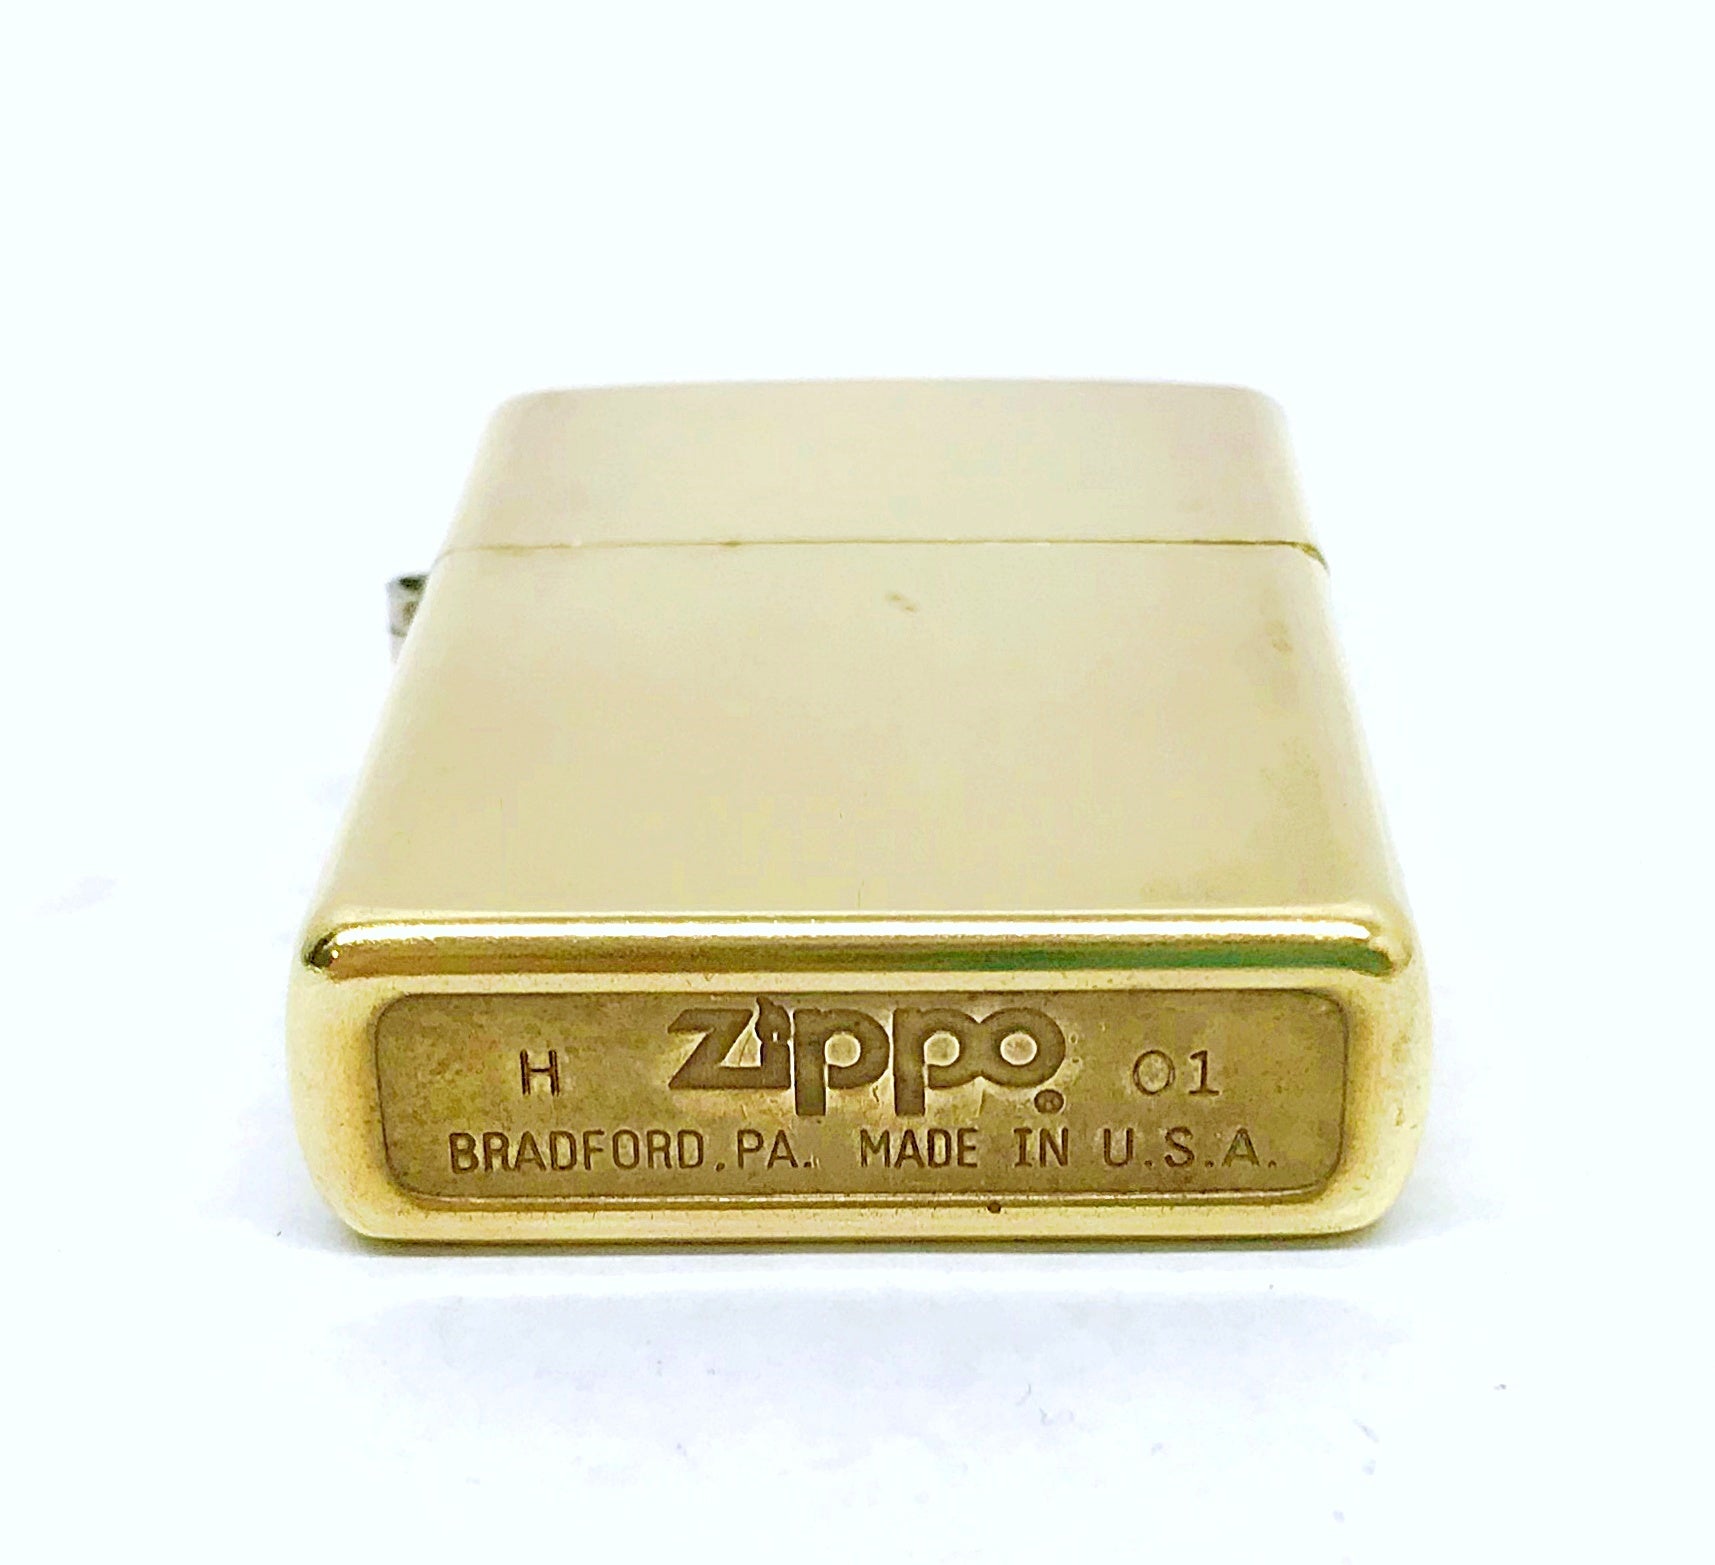 Sold at Auction: 1997 & 2000 Las Vegas Hotel & Casino Zippo Lighter